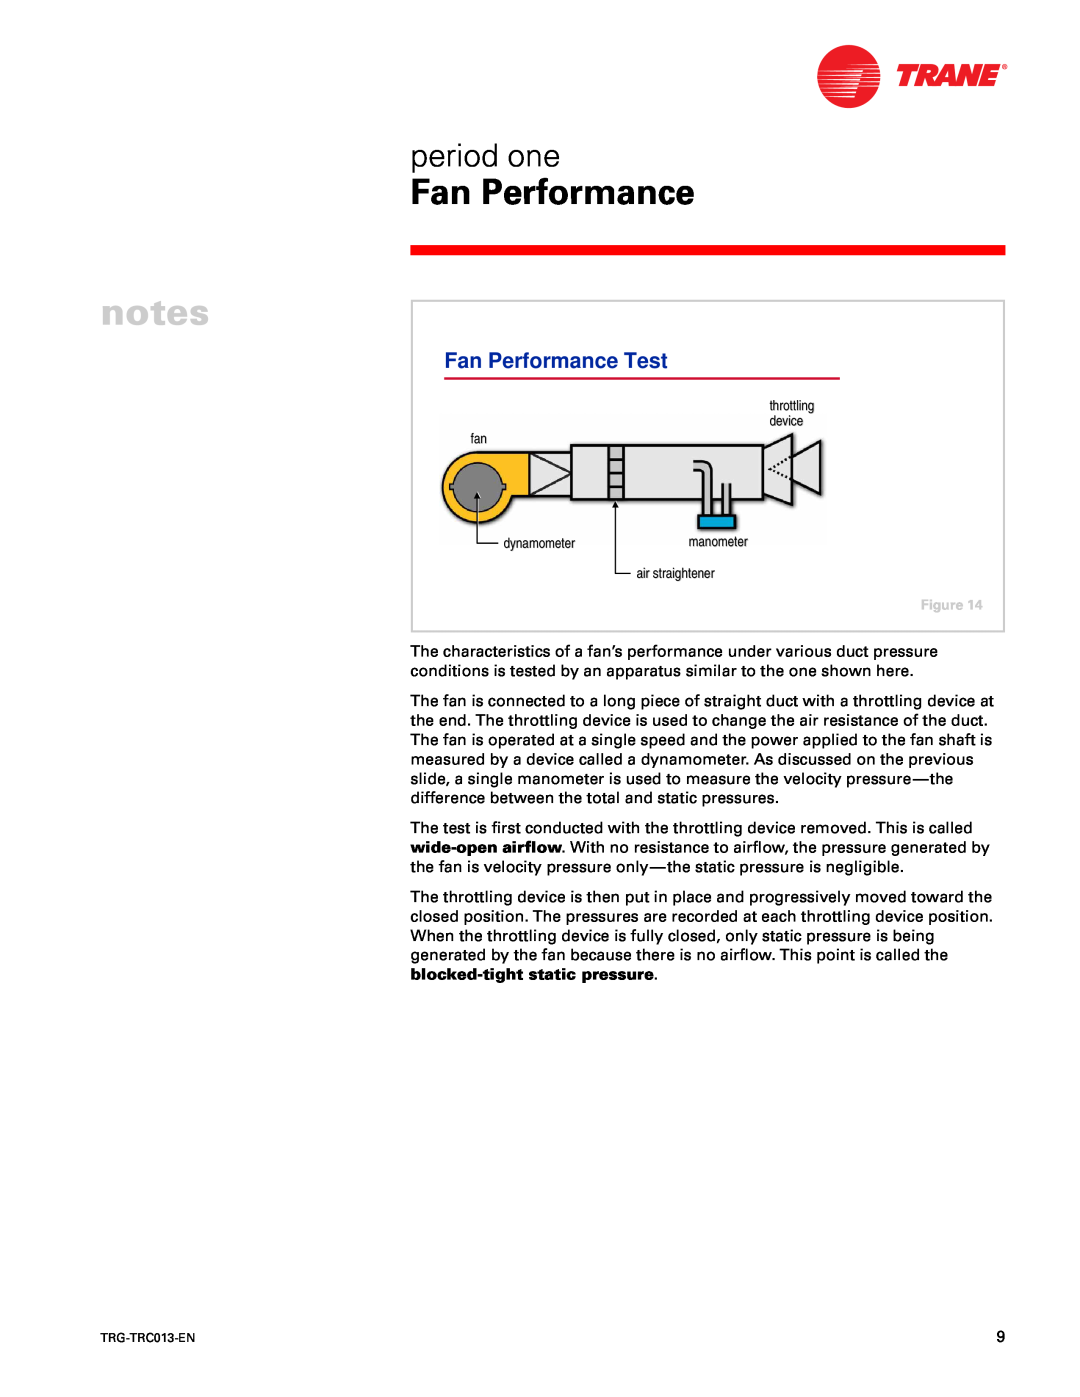 Trane TRG-TRC013-EN manual Fan Performance Test, g DG 